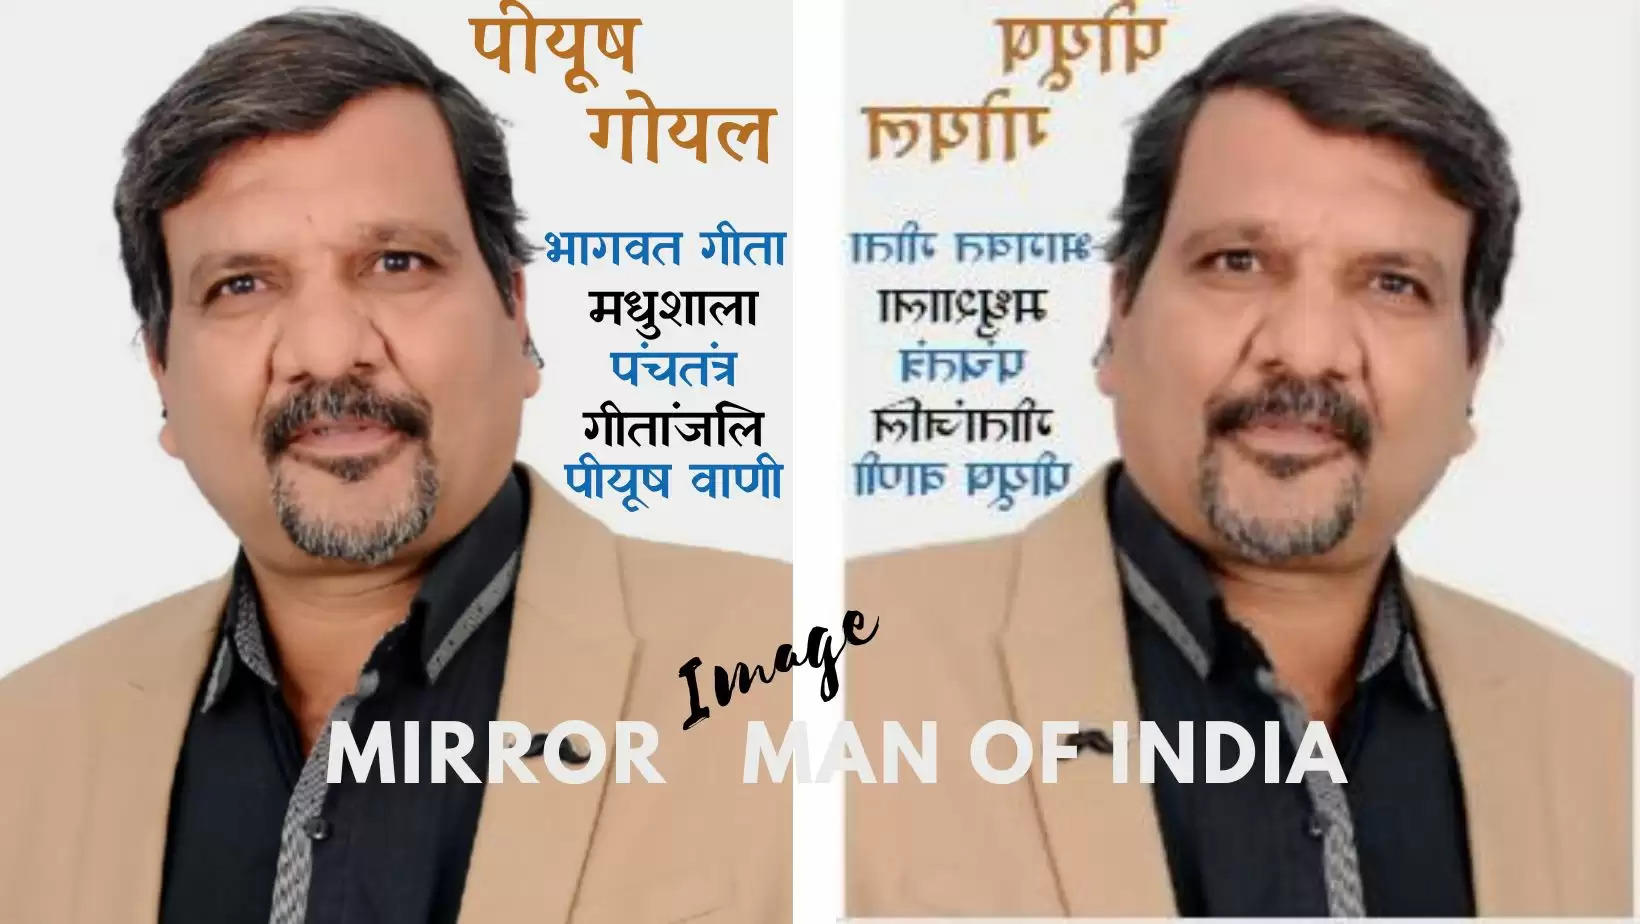 Mirror Image Man of India Piyush Goel Bhagwat Gita, Panchtantra, Madhushala in reverse script